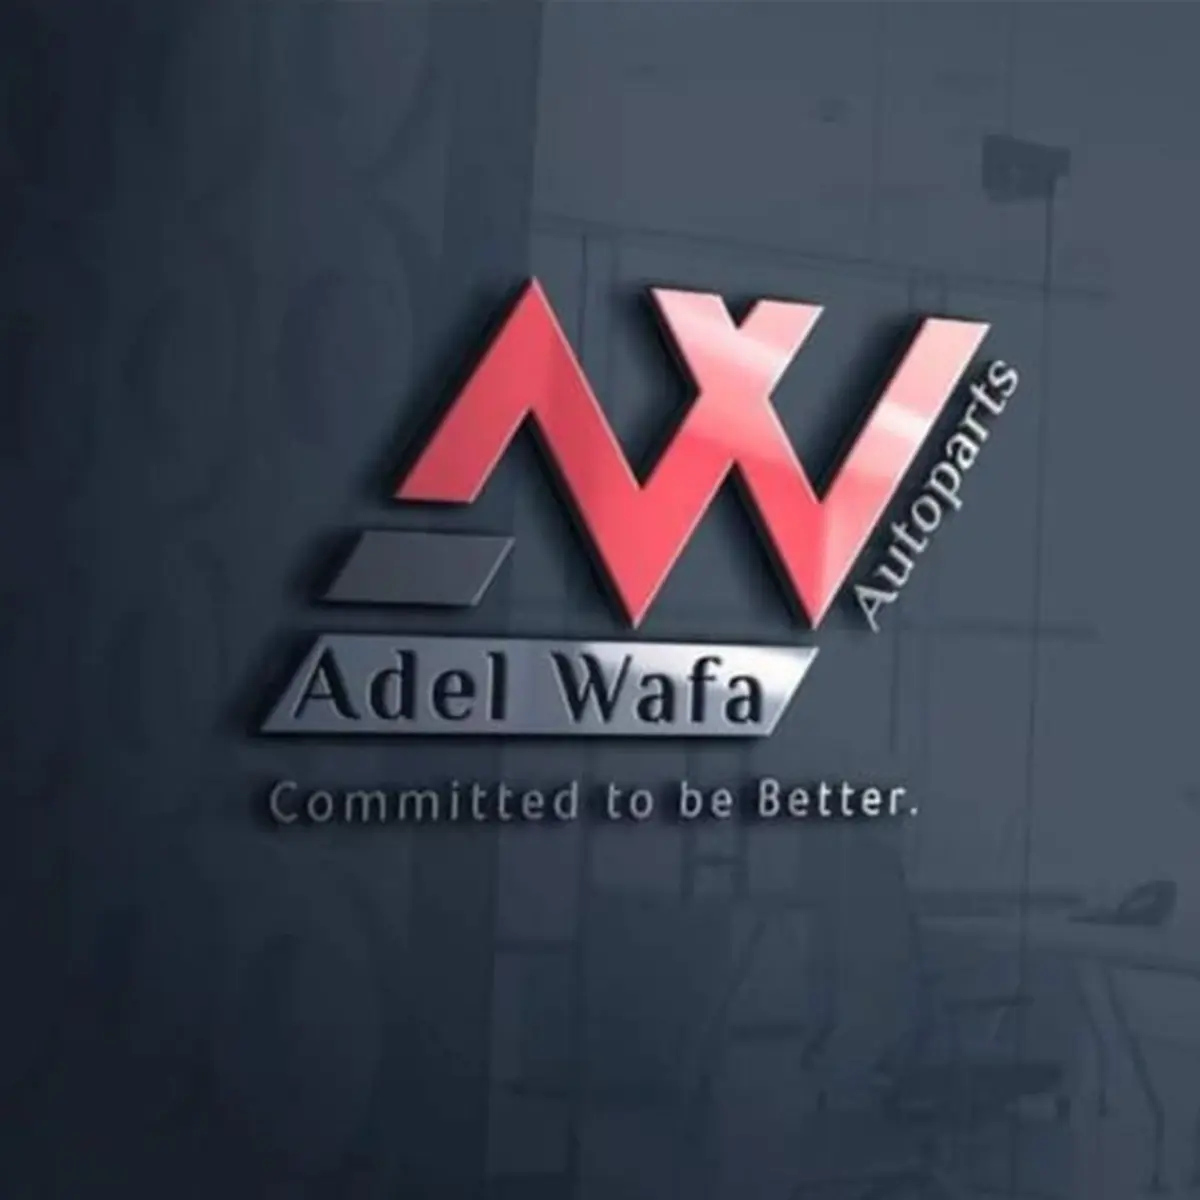 Adel wafa logo